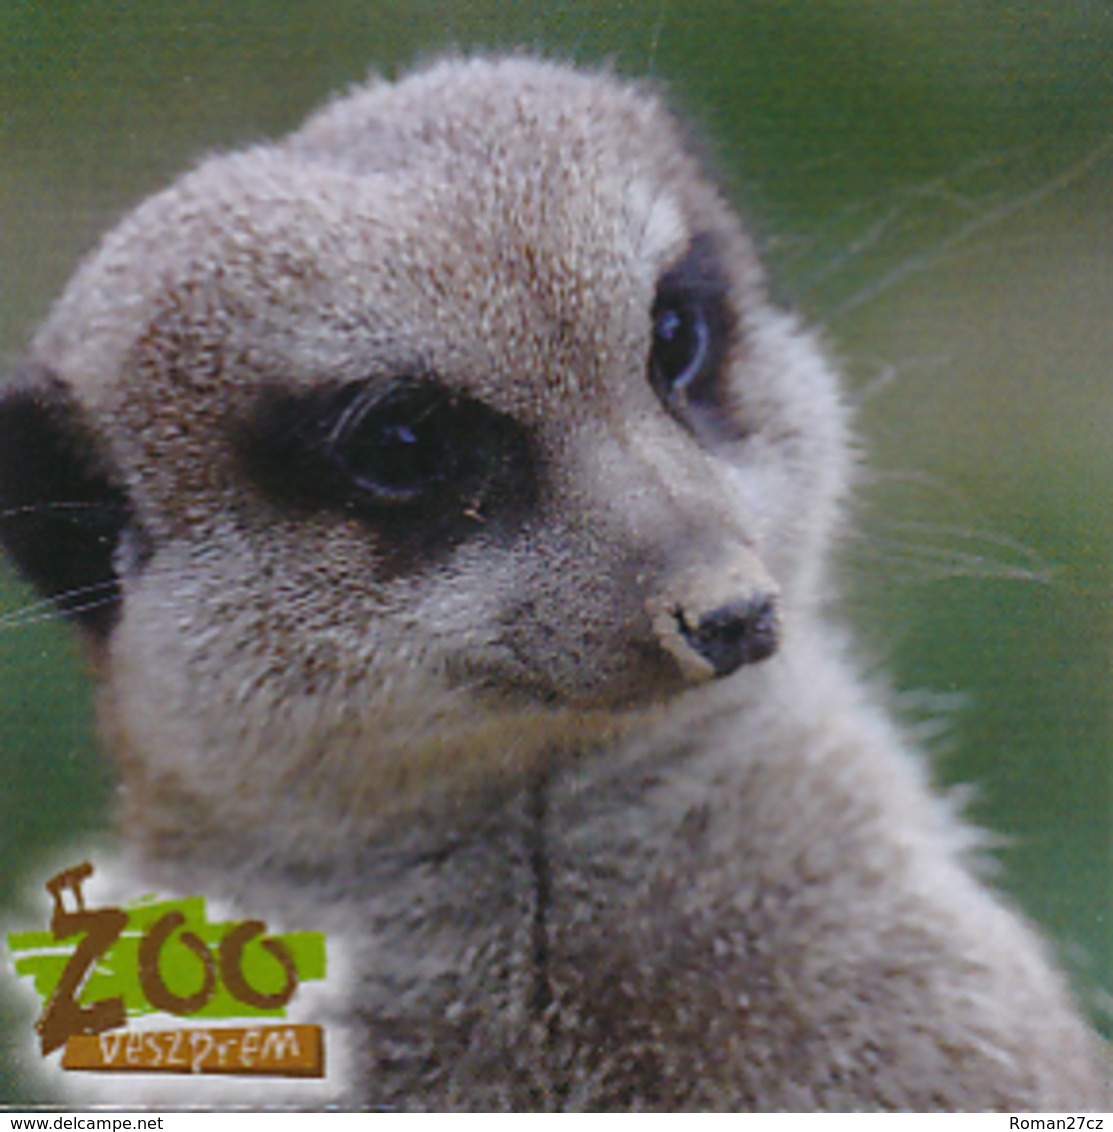 Zoo Veszprem (HU) - Meerkat - Tierwelt & Fauna